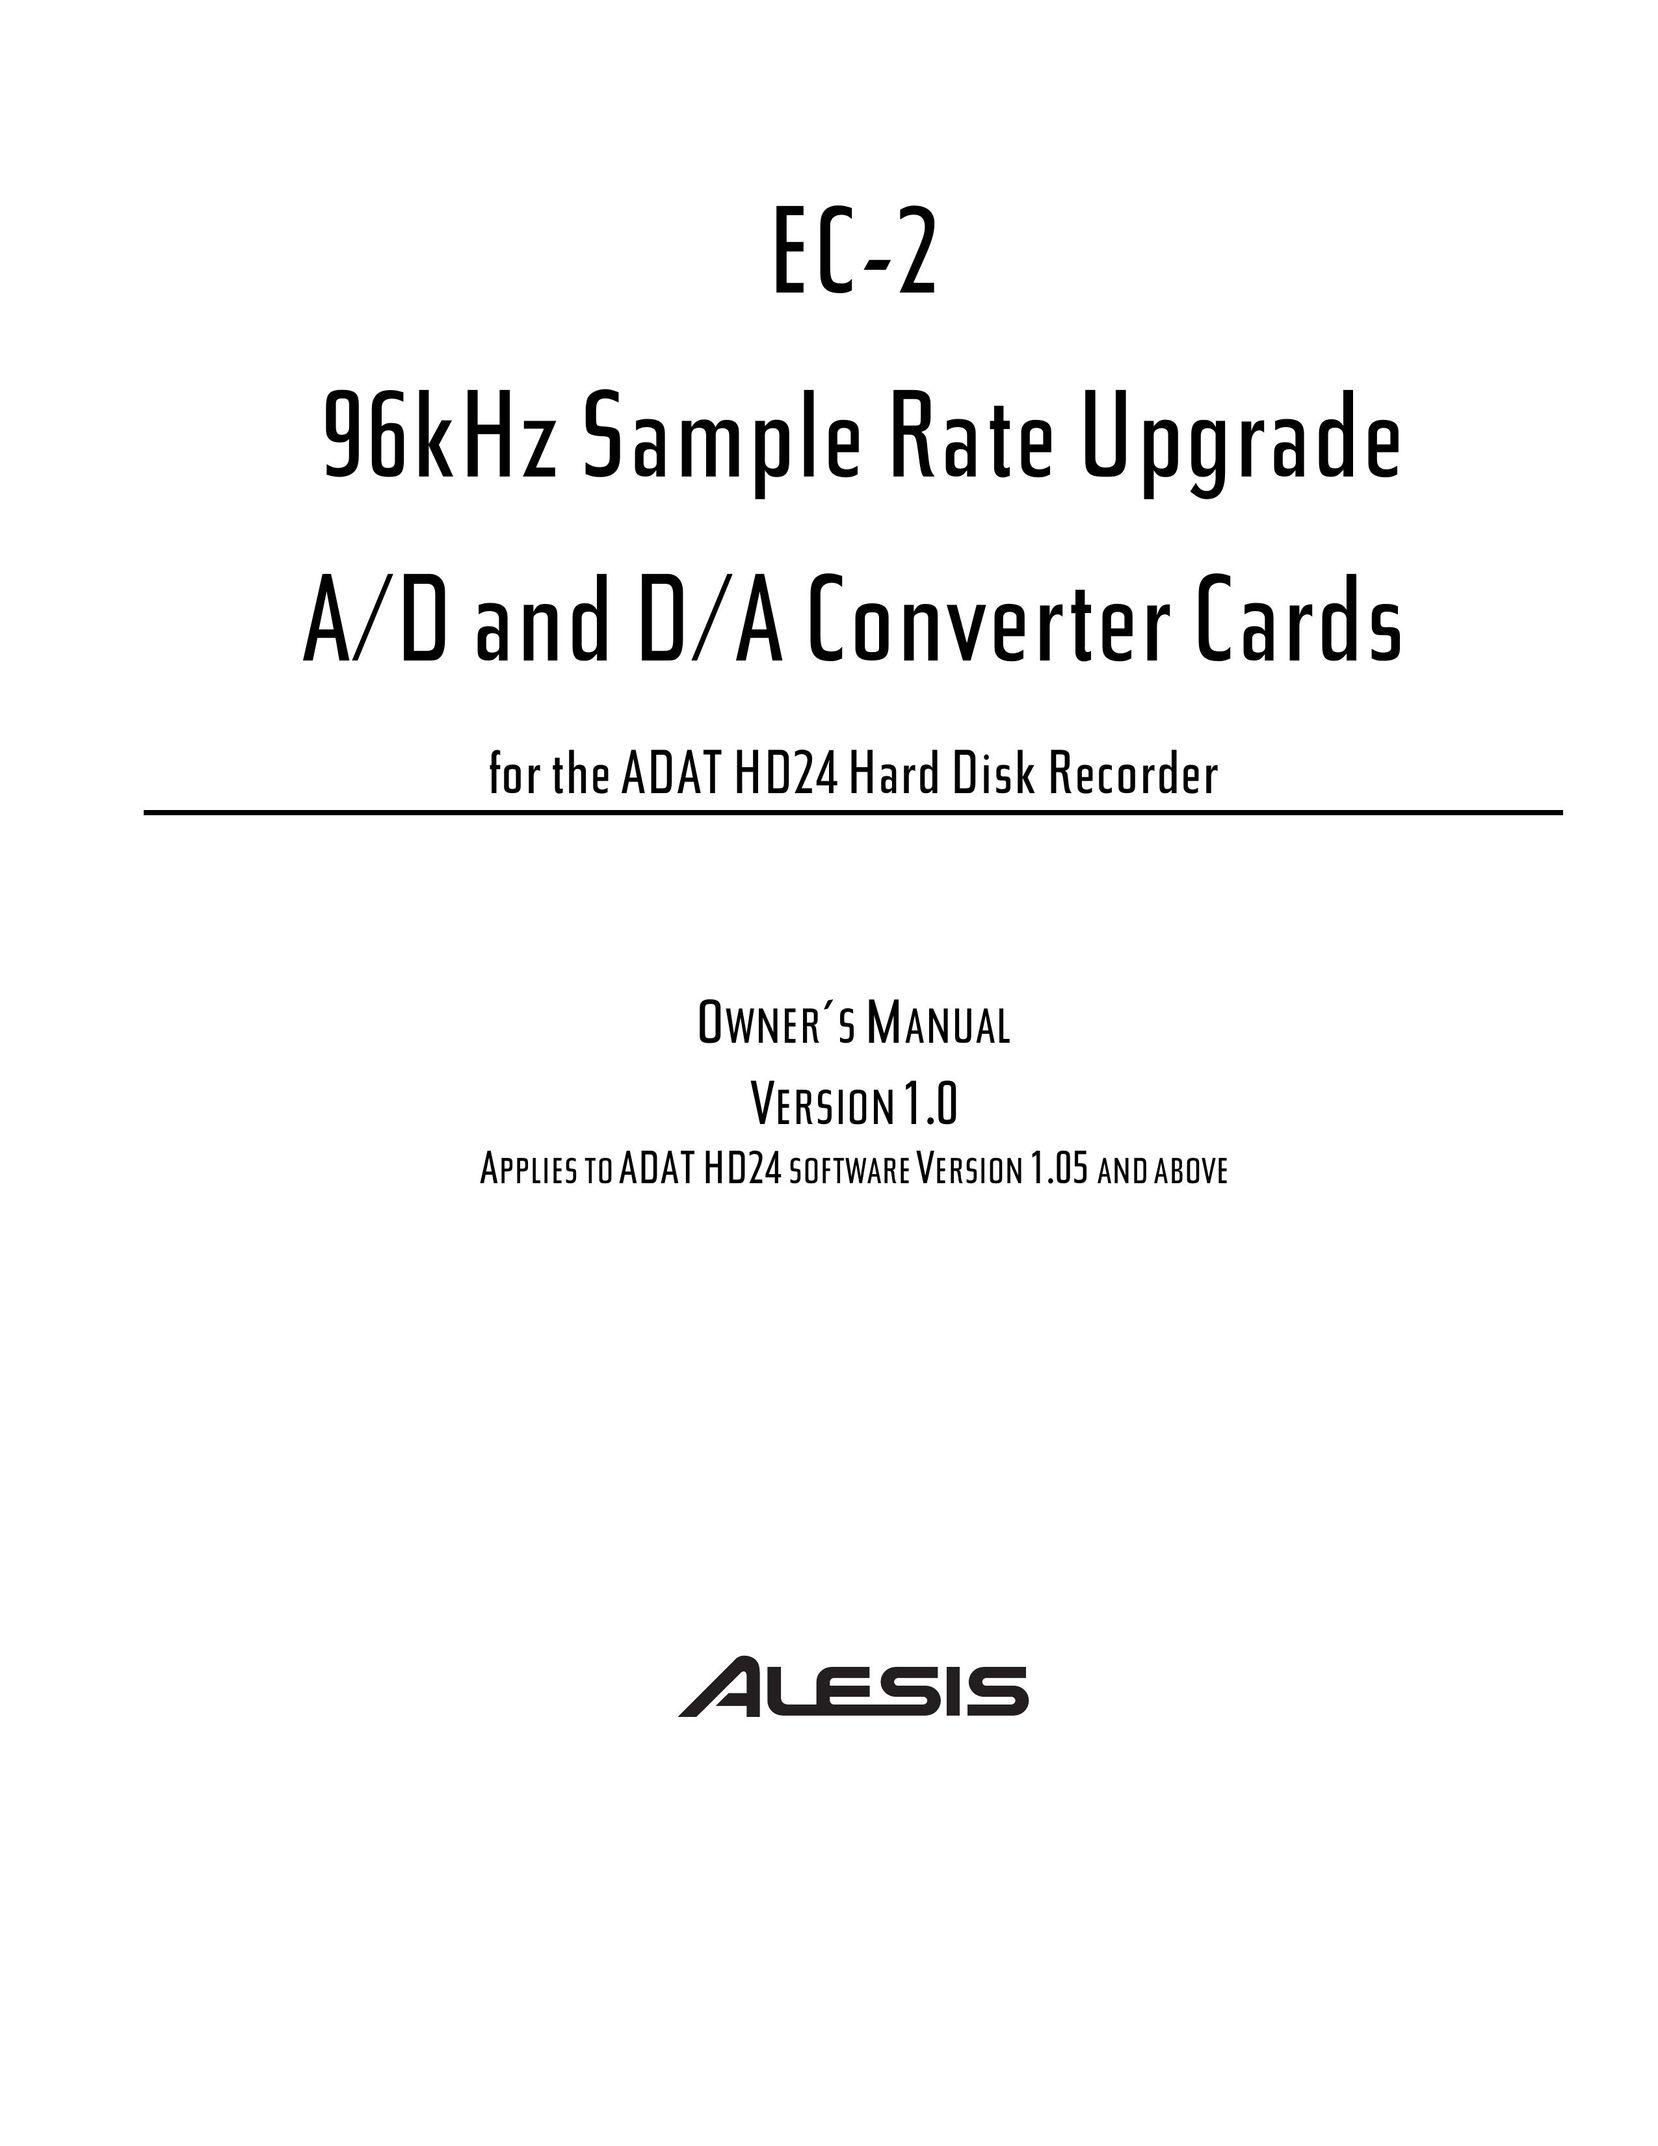 Alesis EC-2 Computer Drive User Manual (Page 1)